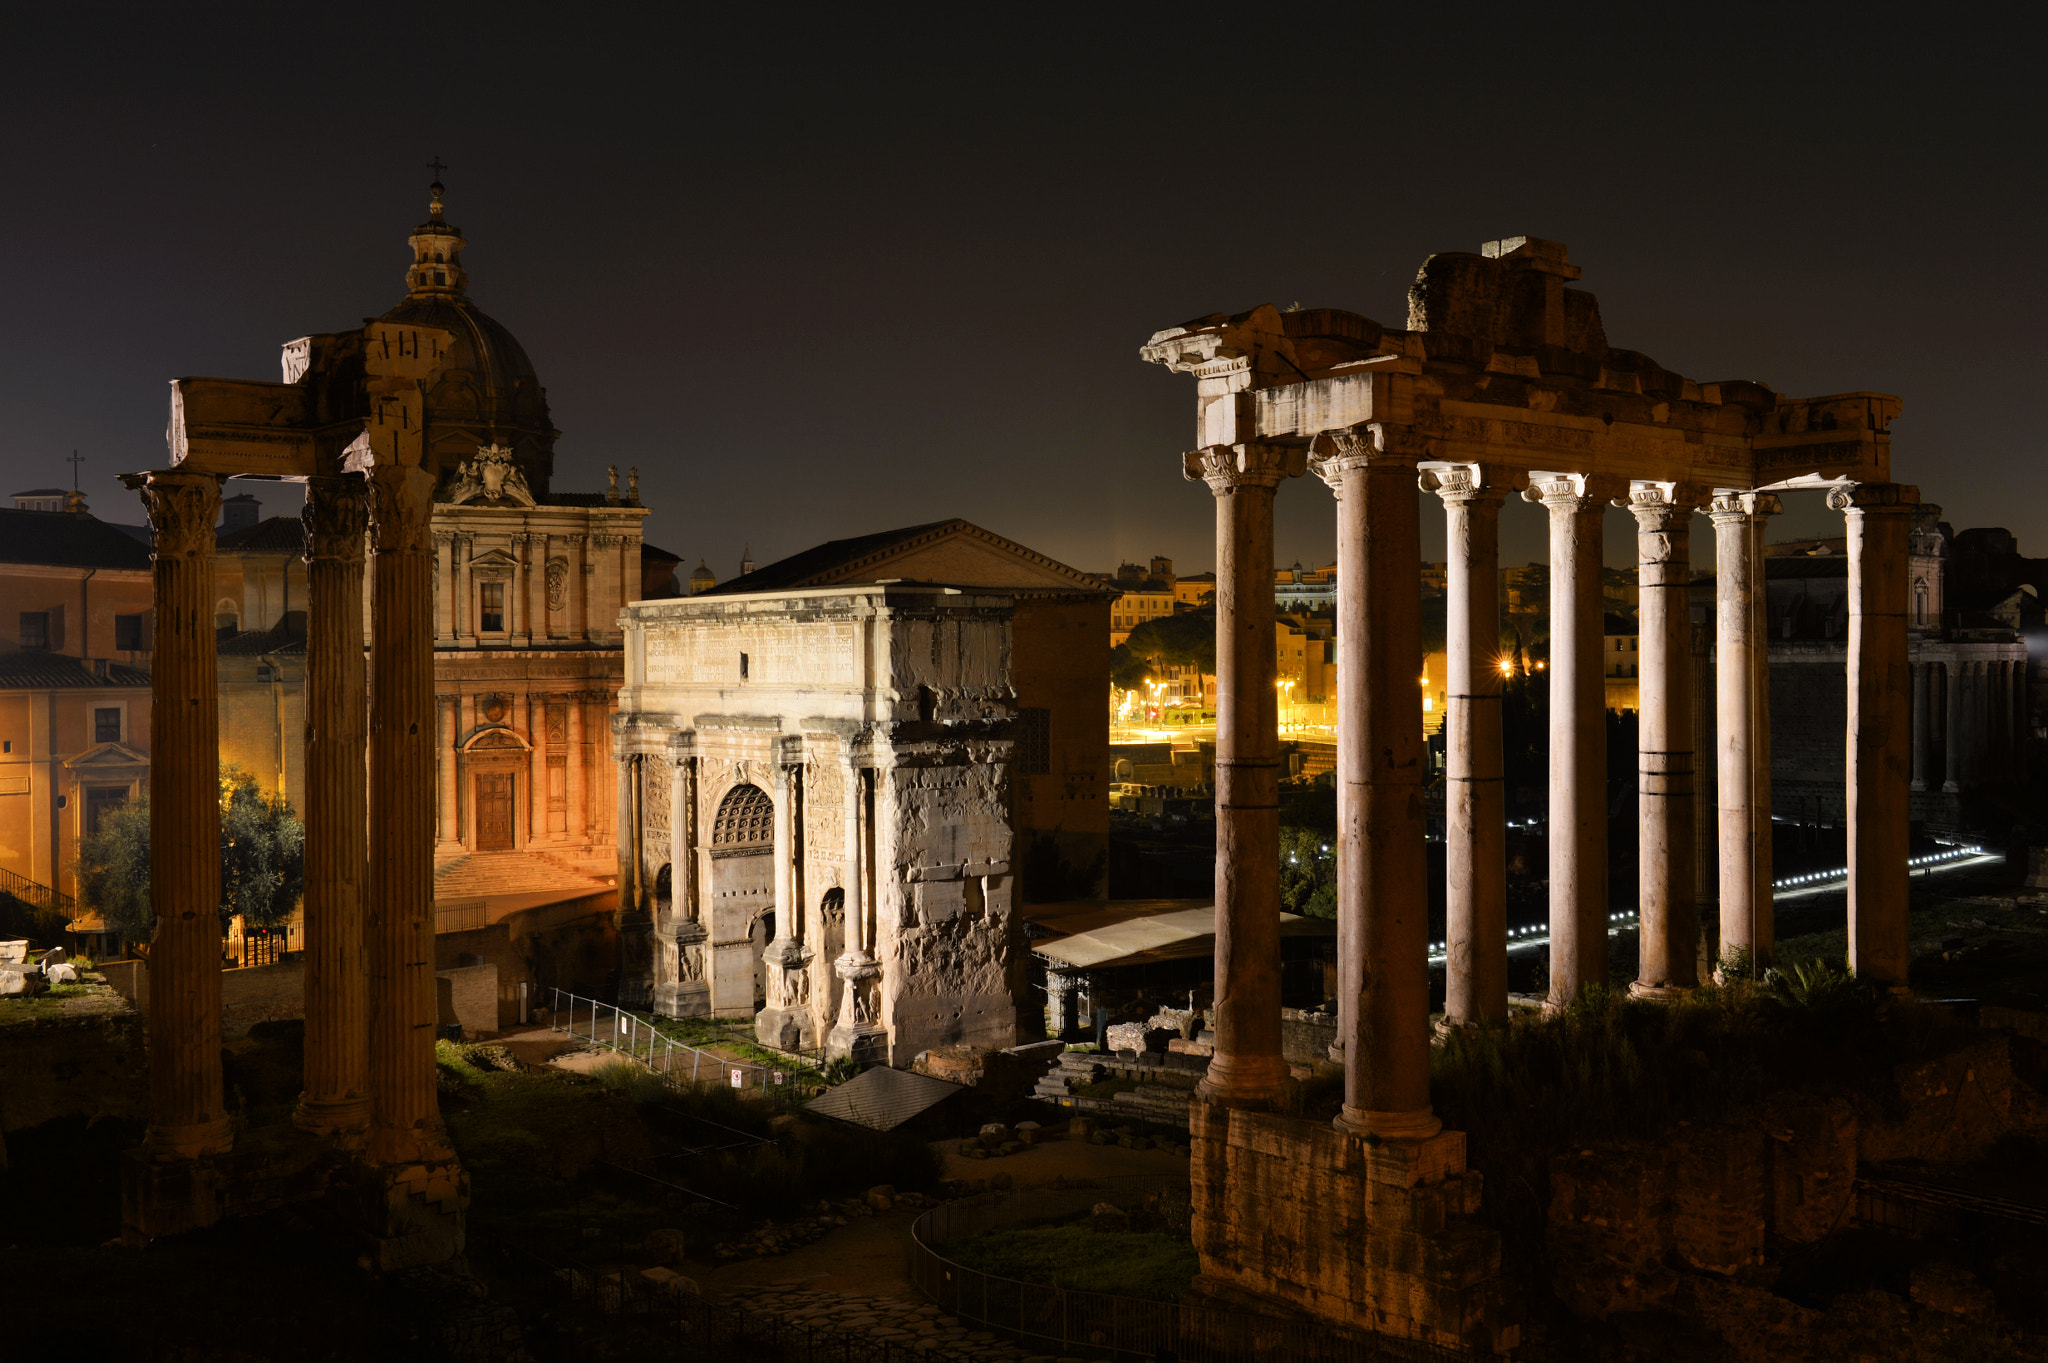 The Roman Forum